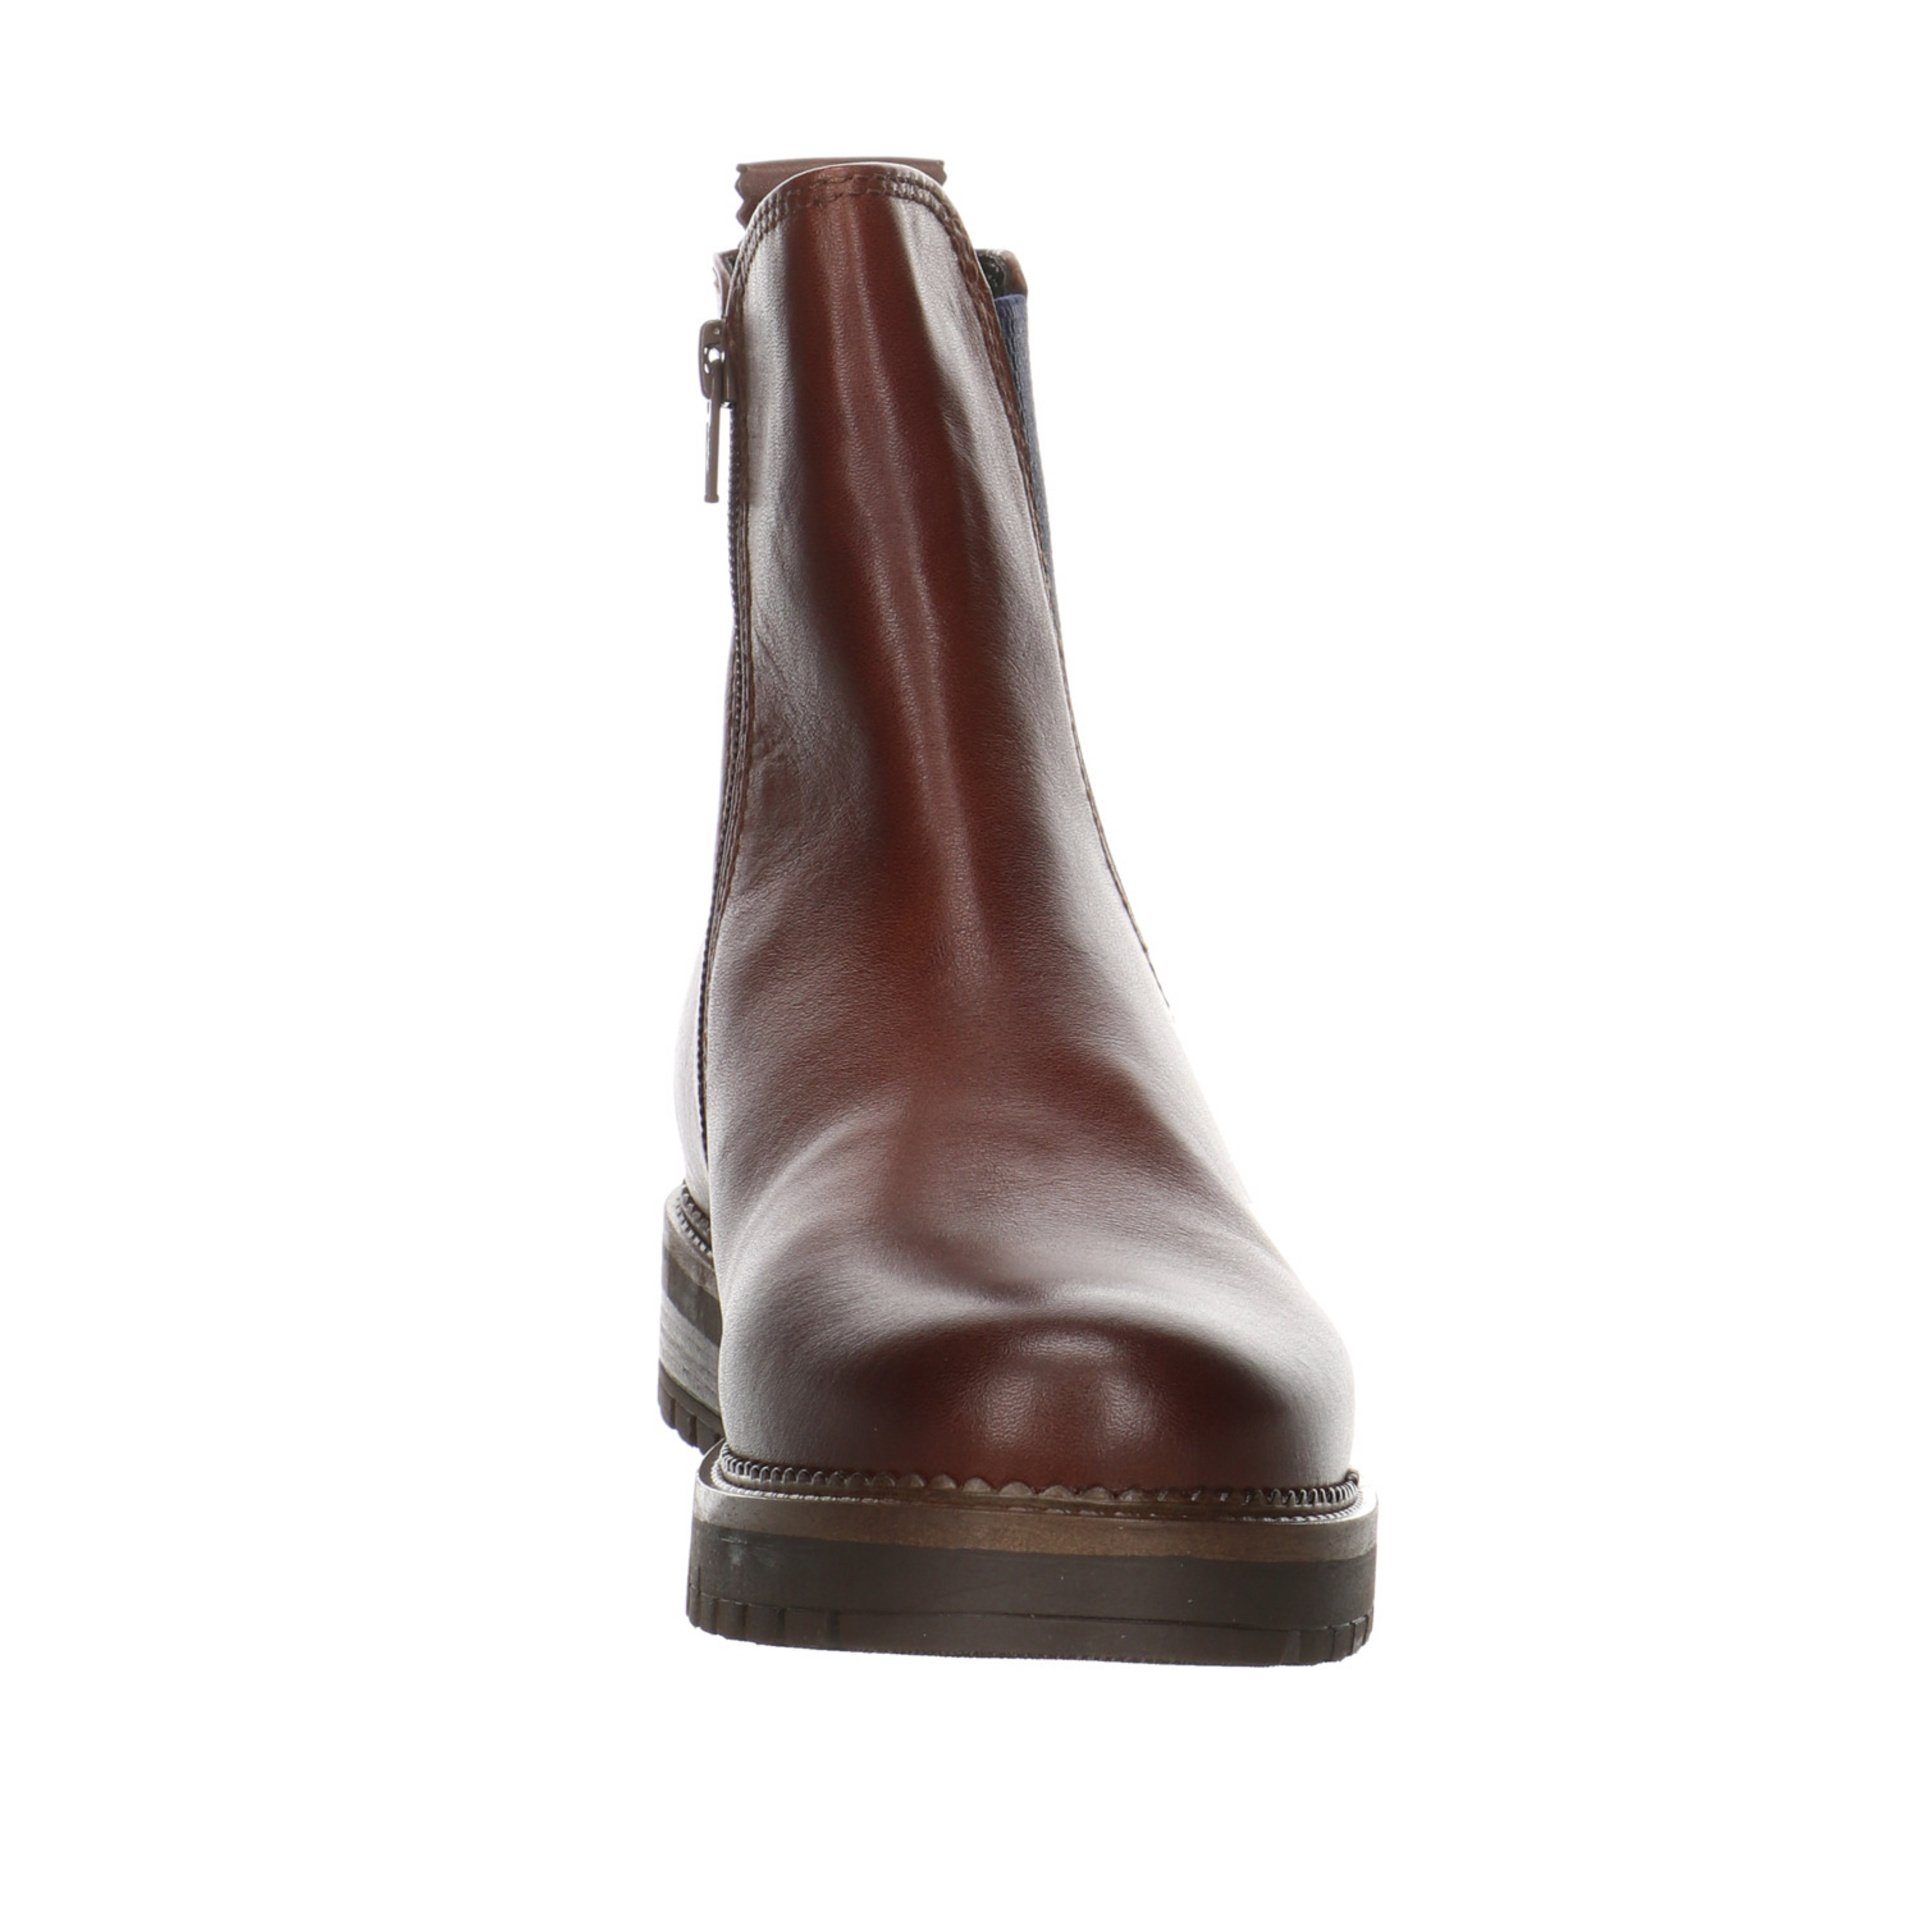 Damen sattel Stiefel Chelsea Leder-/Textilkombination Stiefel Schuhe (river) Gabor Boots